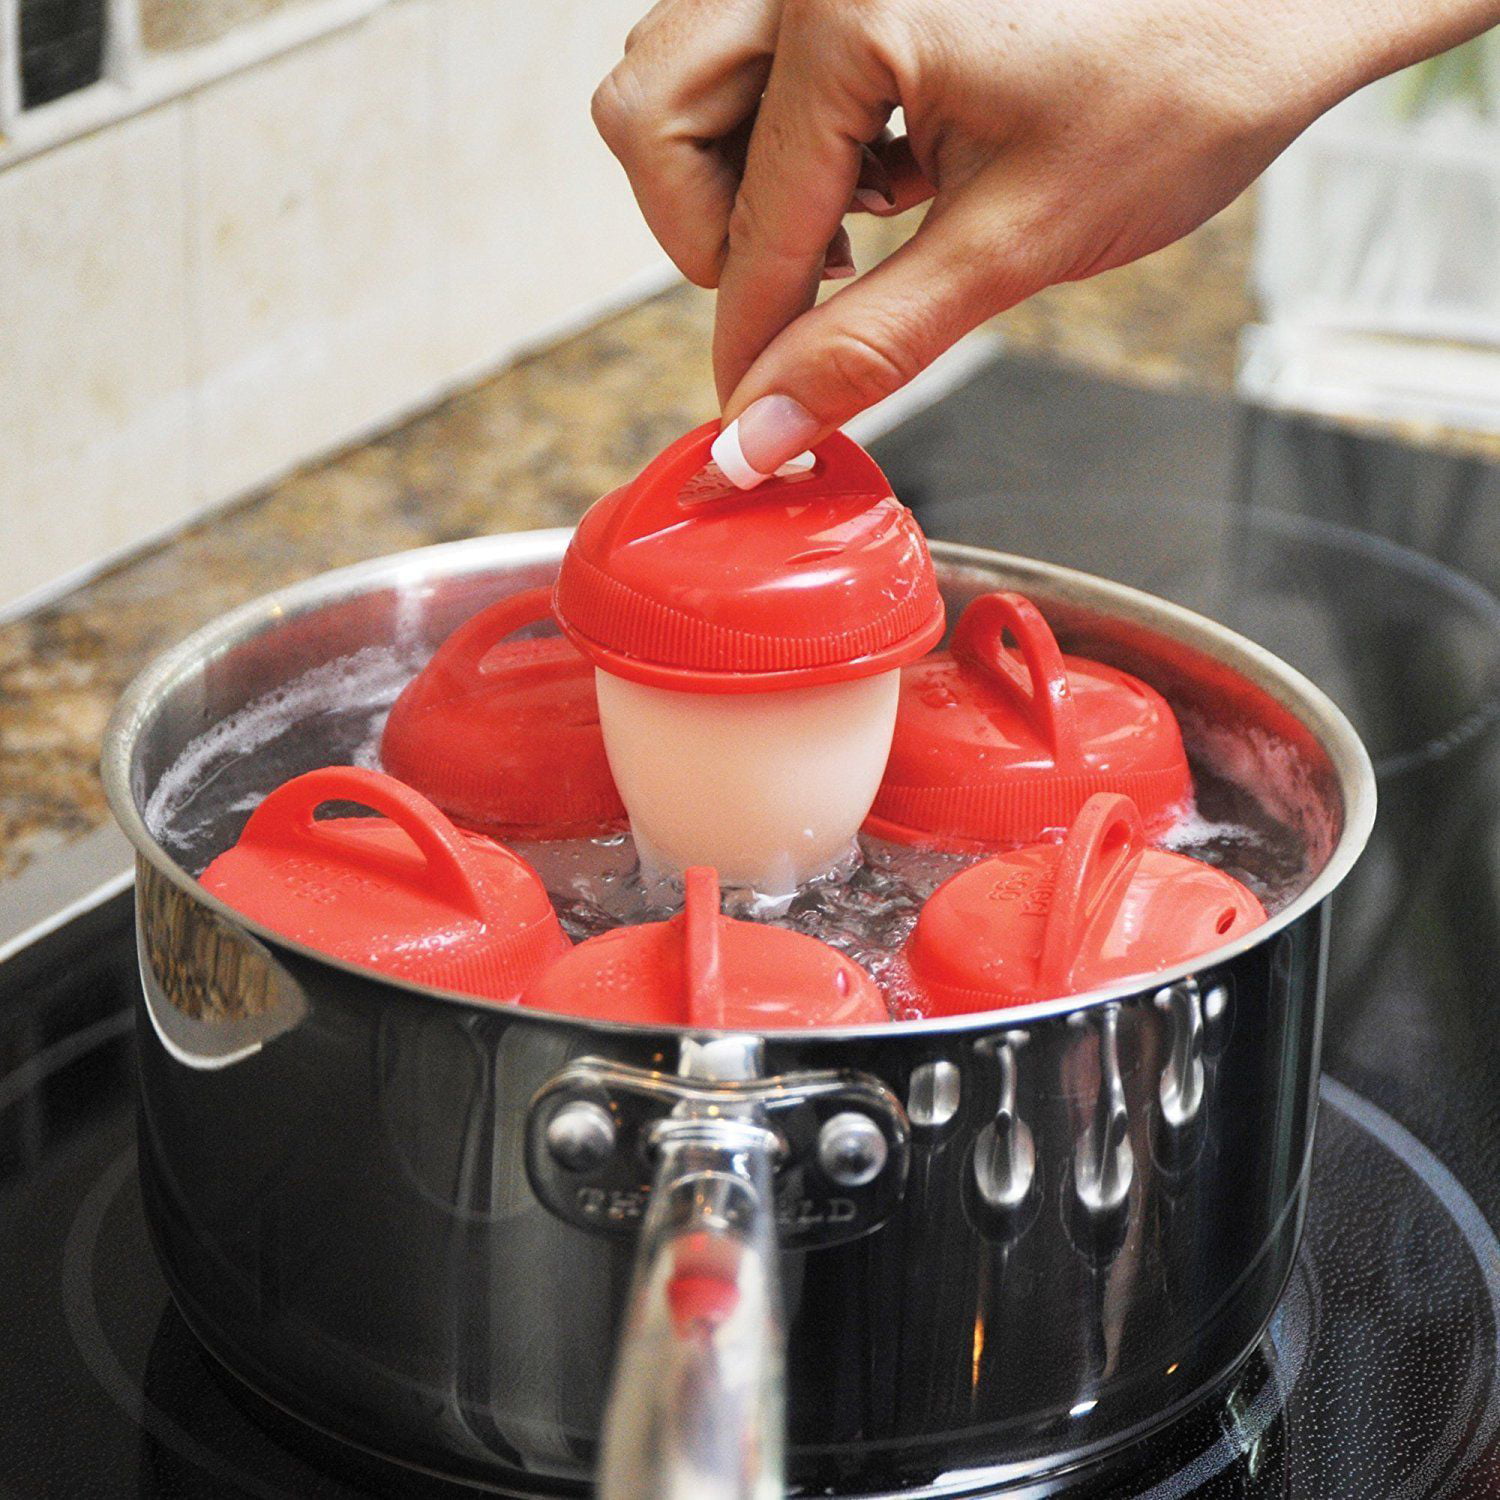 2Pcs Egg Holder Octopus Shape Egg Boiler for Making Soft or Hard Boiled Eggs  - Kitchen Tools & Utensils - Miami, Florida, Facebook Marketplace